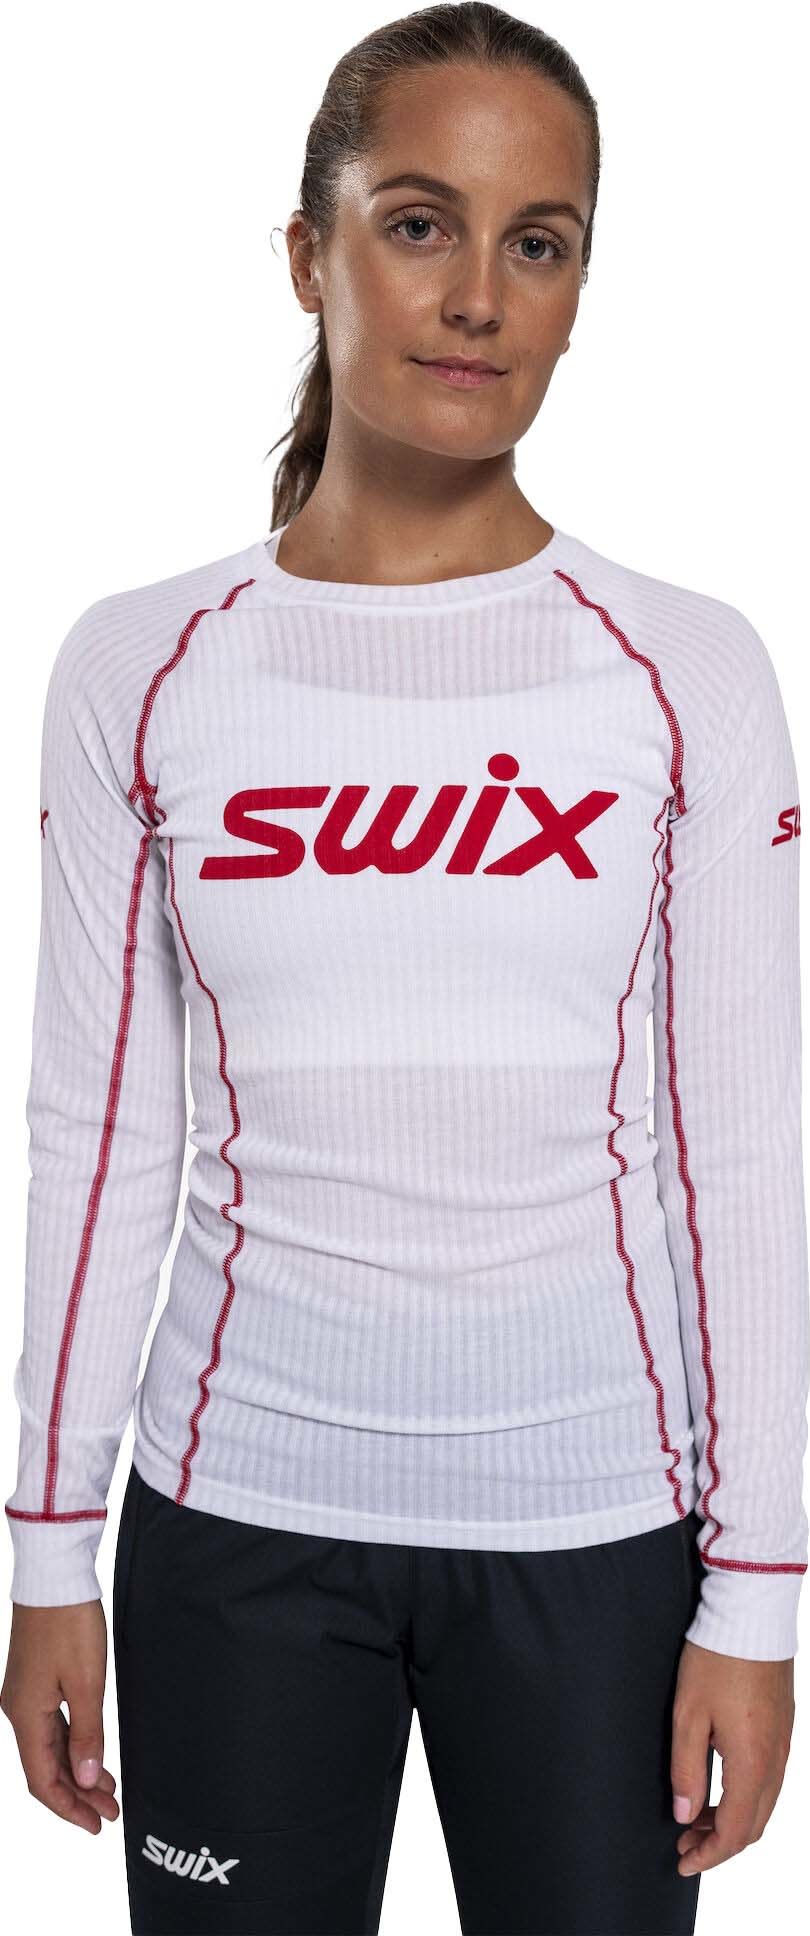 Women’s RaceX Classic Long Sleeve Bright White/Swix Red